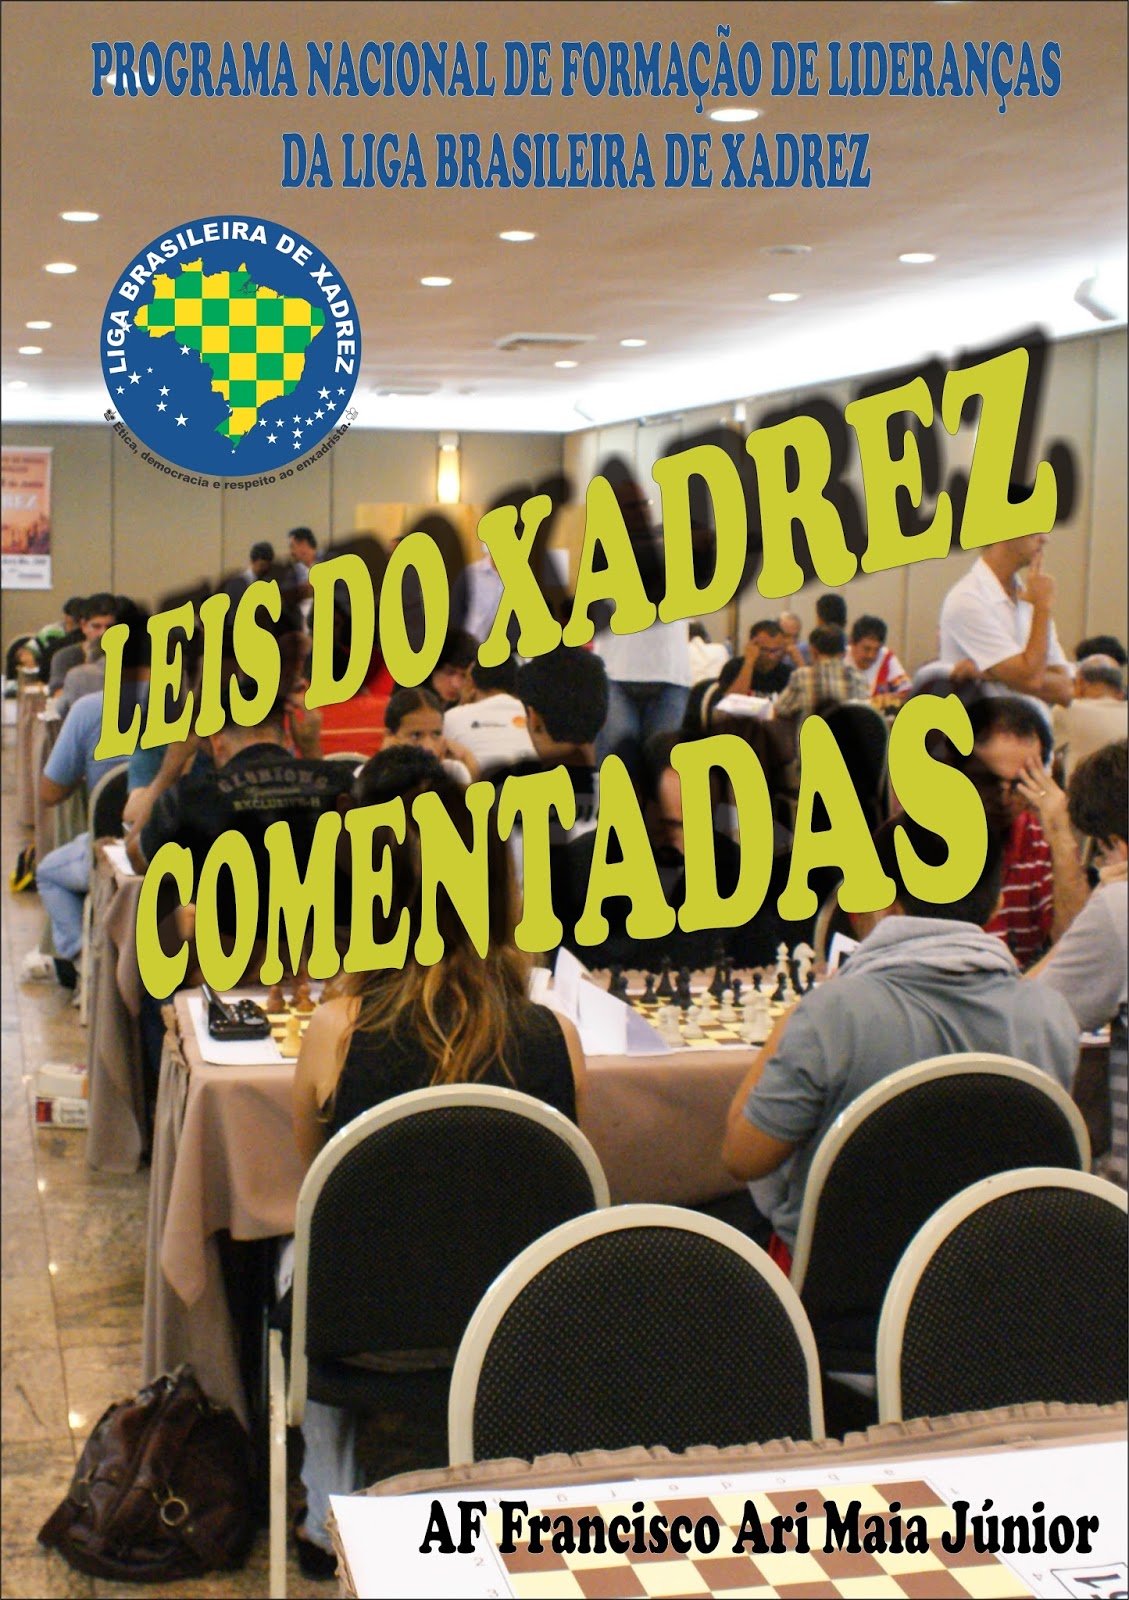 Liga Xadrez Brasília